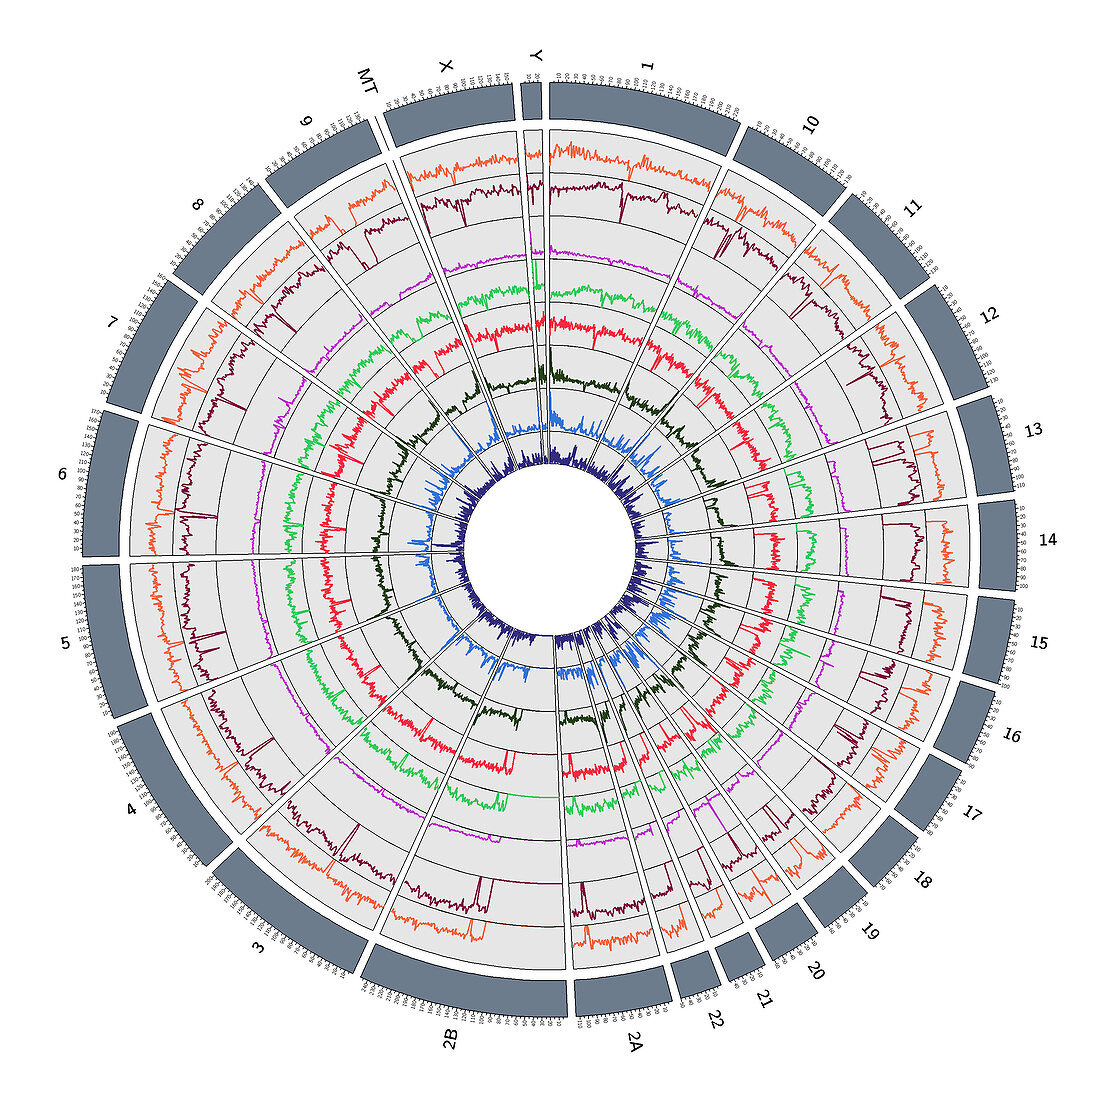 Circos, Circular Genome Map, Chimp